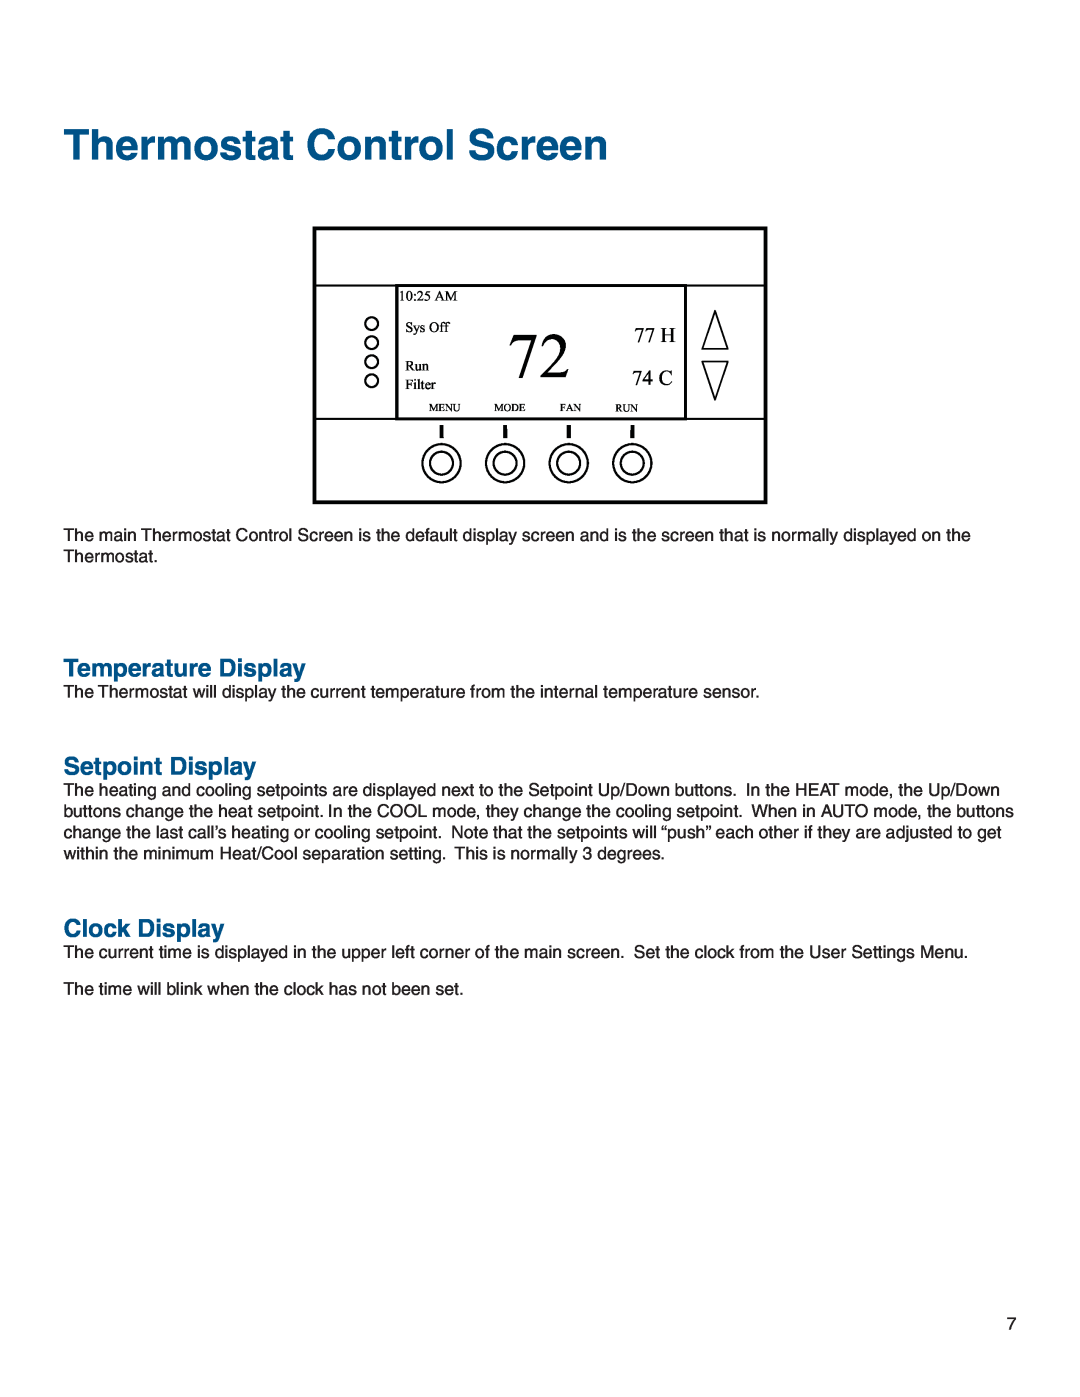 Vizio TZEMT400AB32MAA warranty Thermostat Control Screen, Temperature Display, Setpoint Display, Clock Display, 77 H, 74 C 